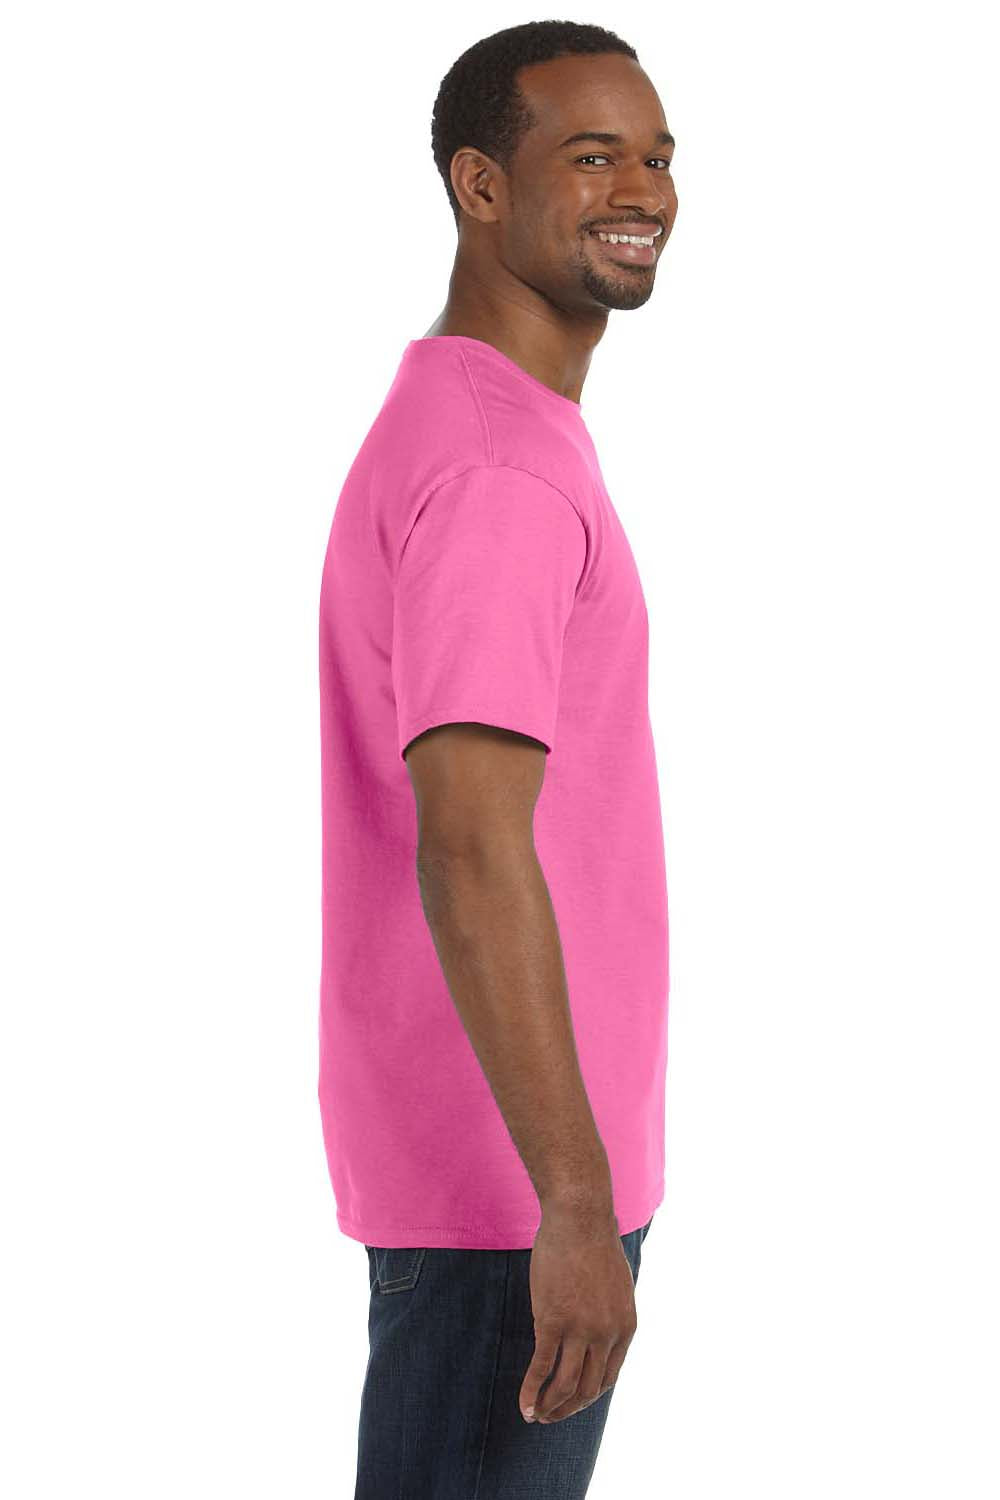 Hanes 5250T Mens ComfortSoft Short Sleeve Crewneck T-Shirt Pink Side